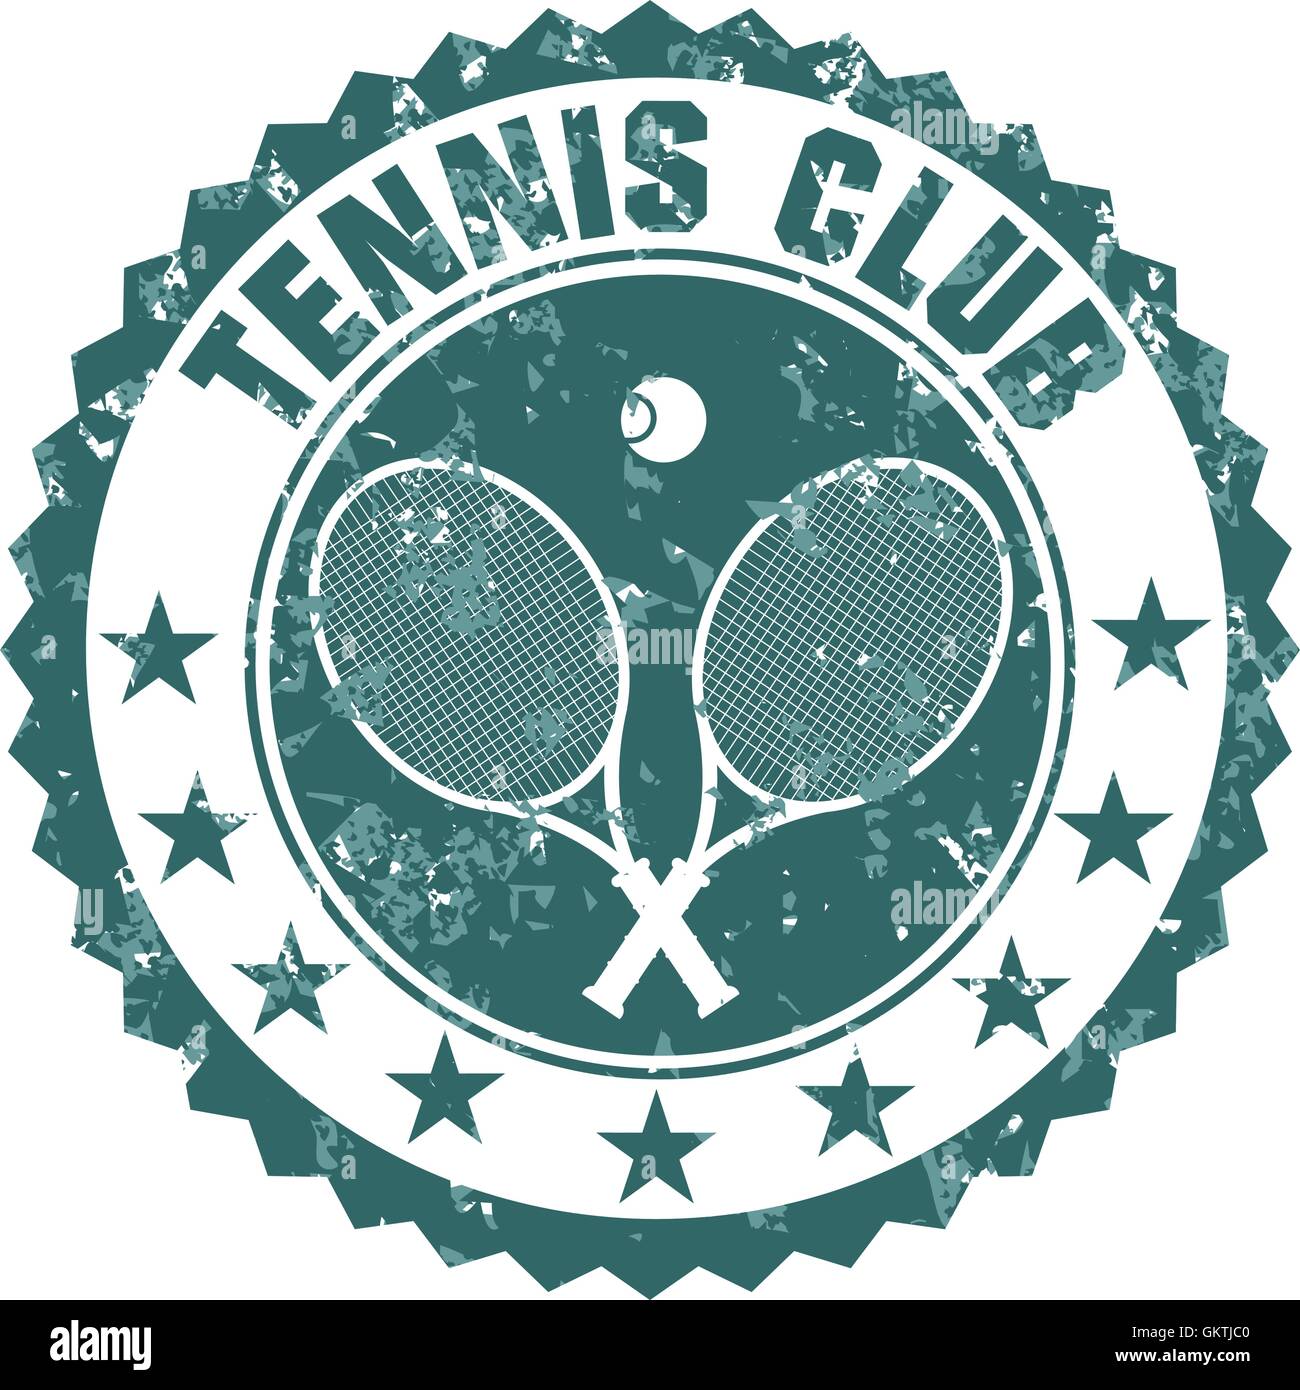 Tennis club stamp Stock Vector